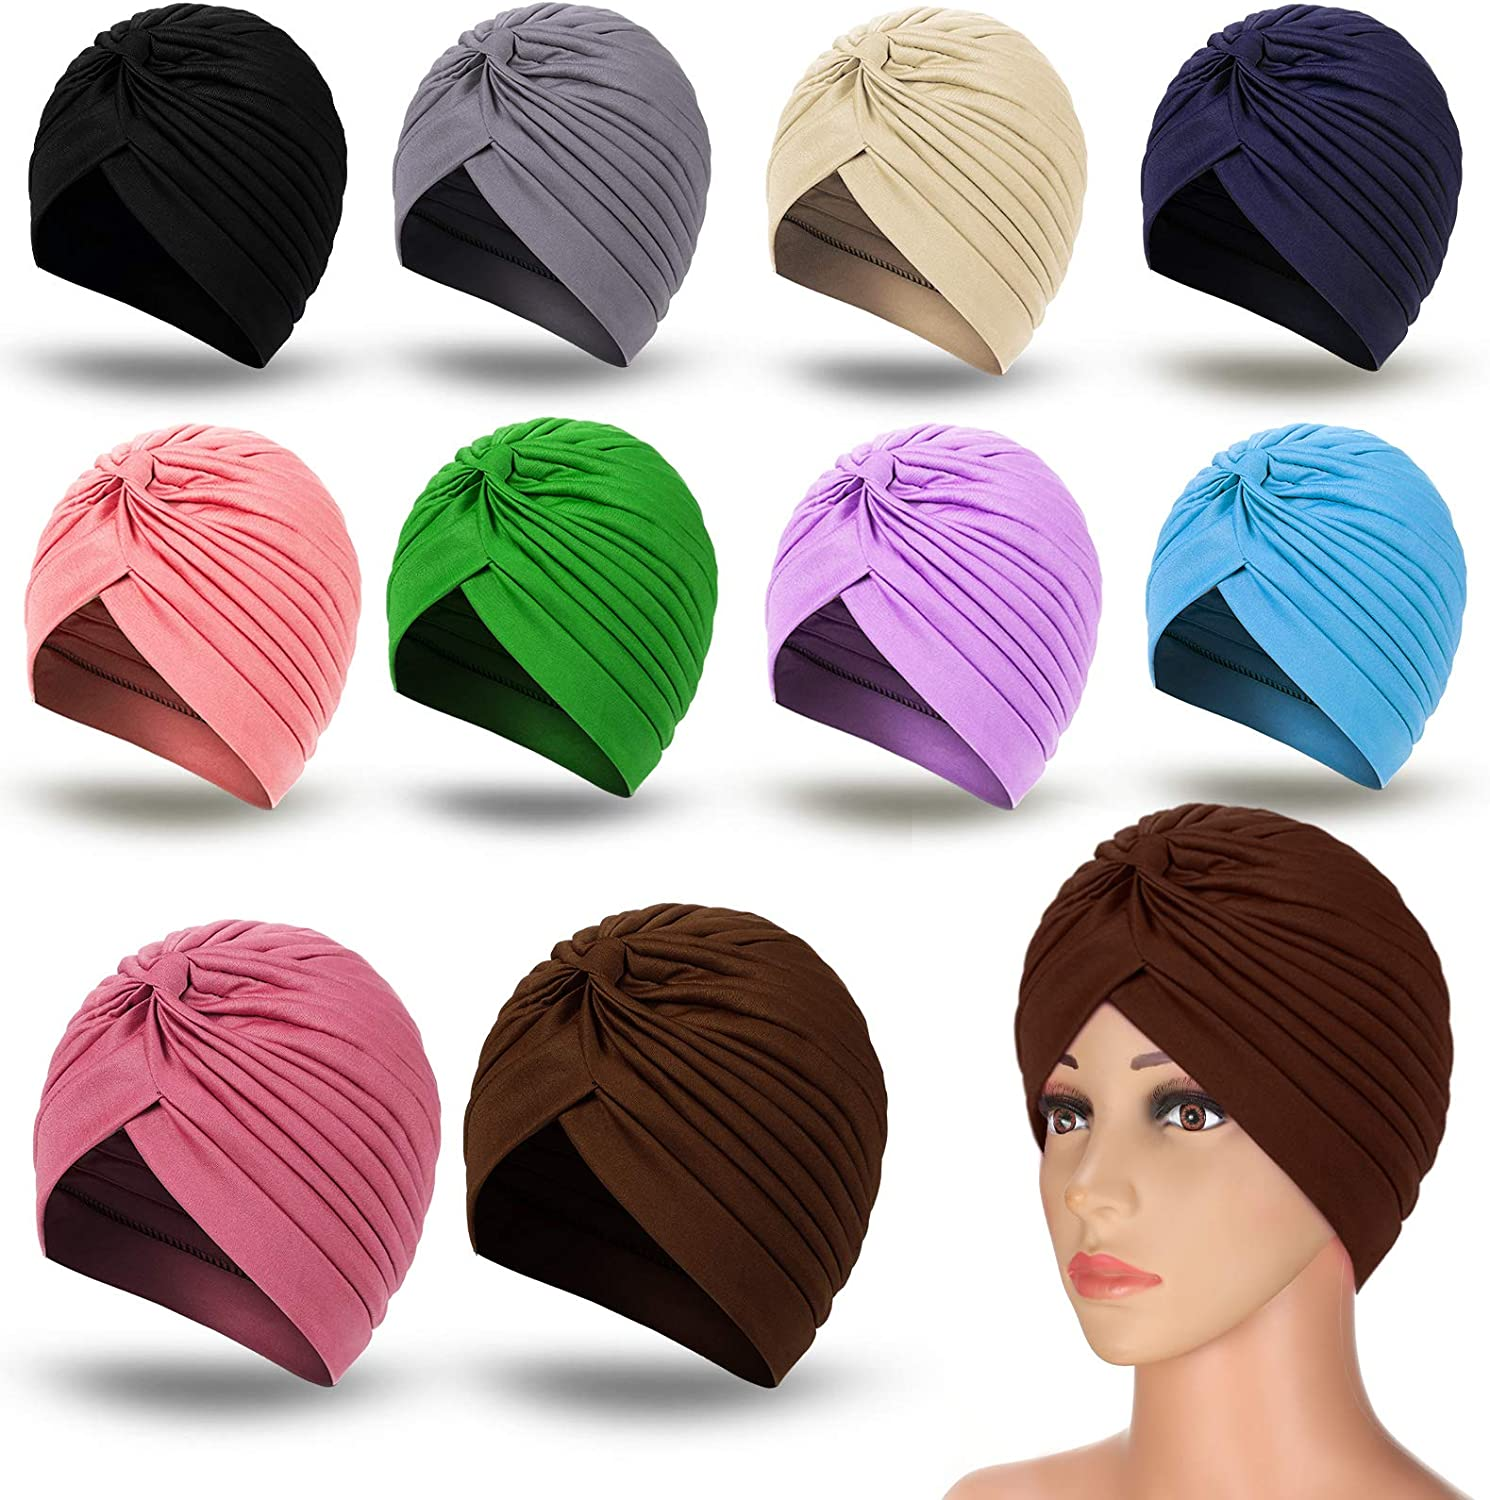  stretchy turbans